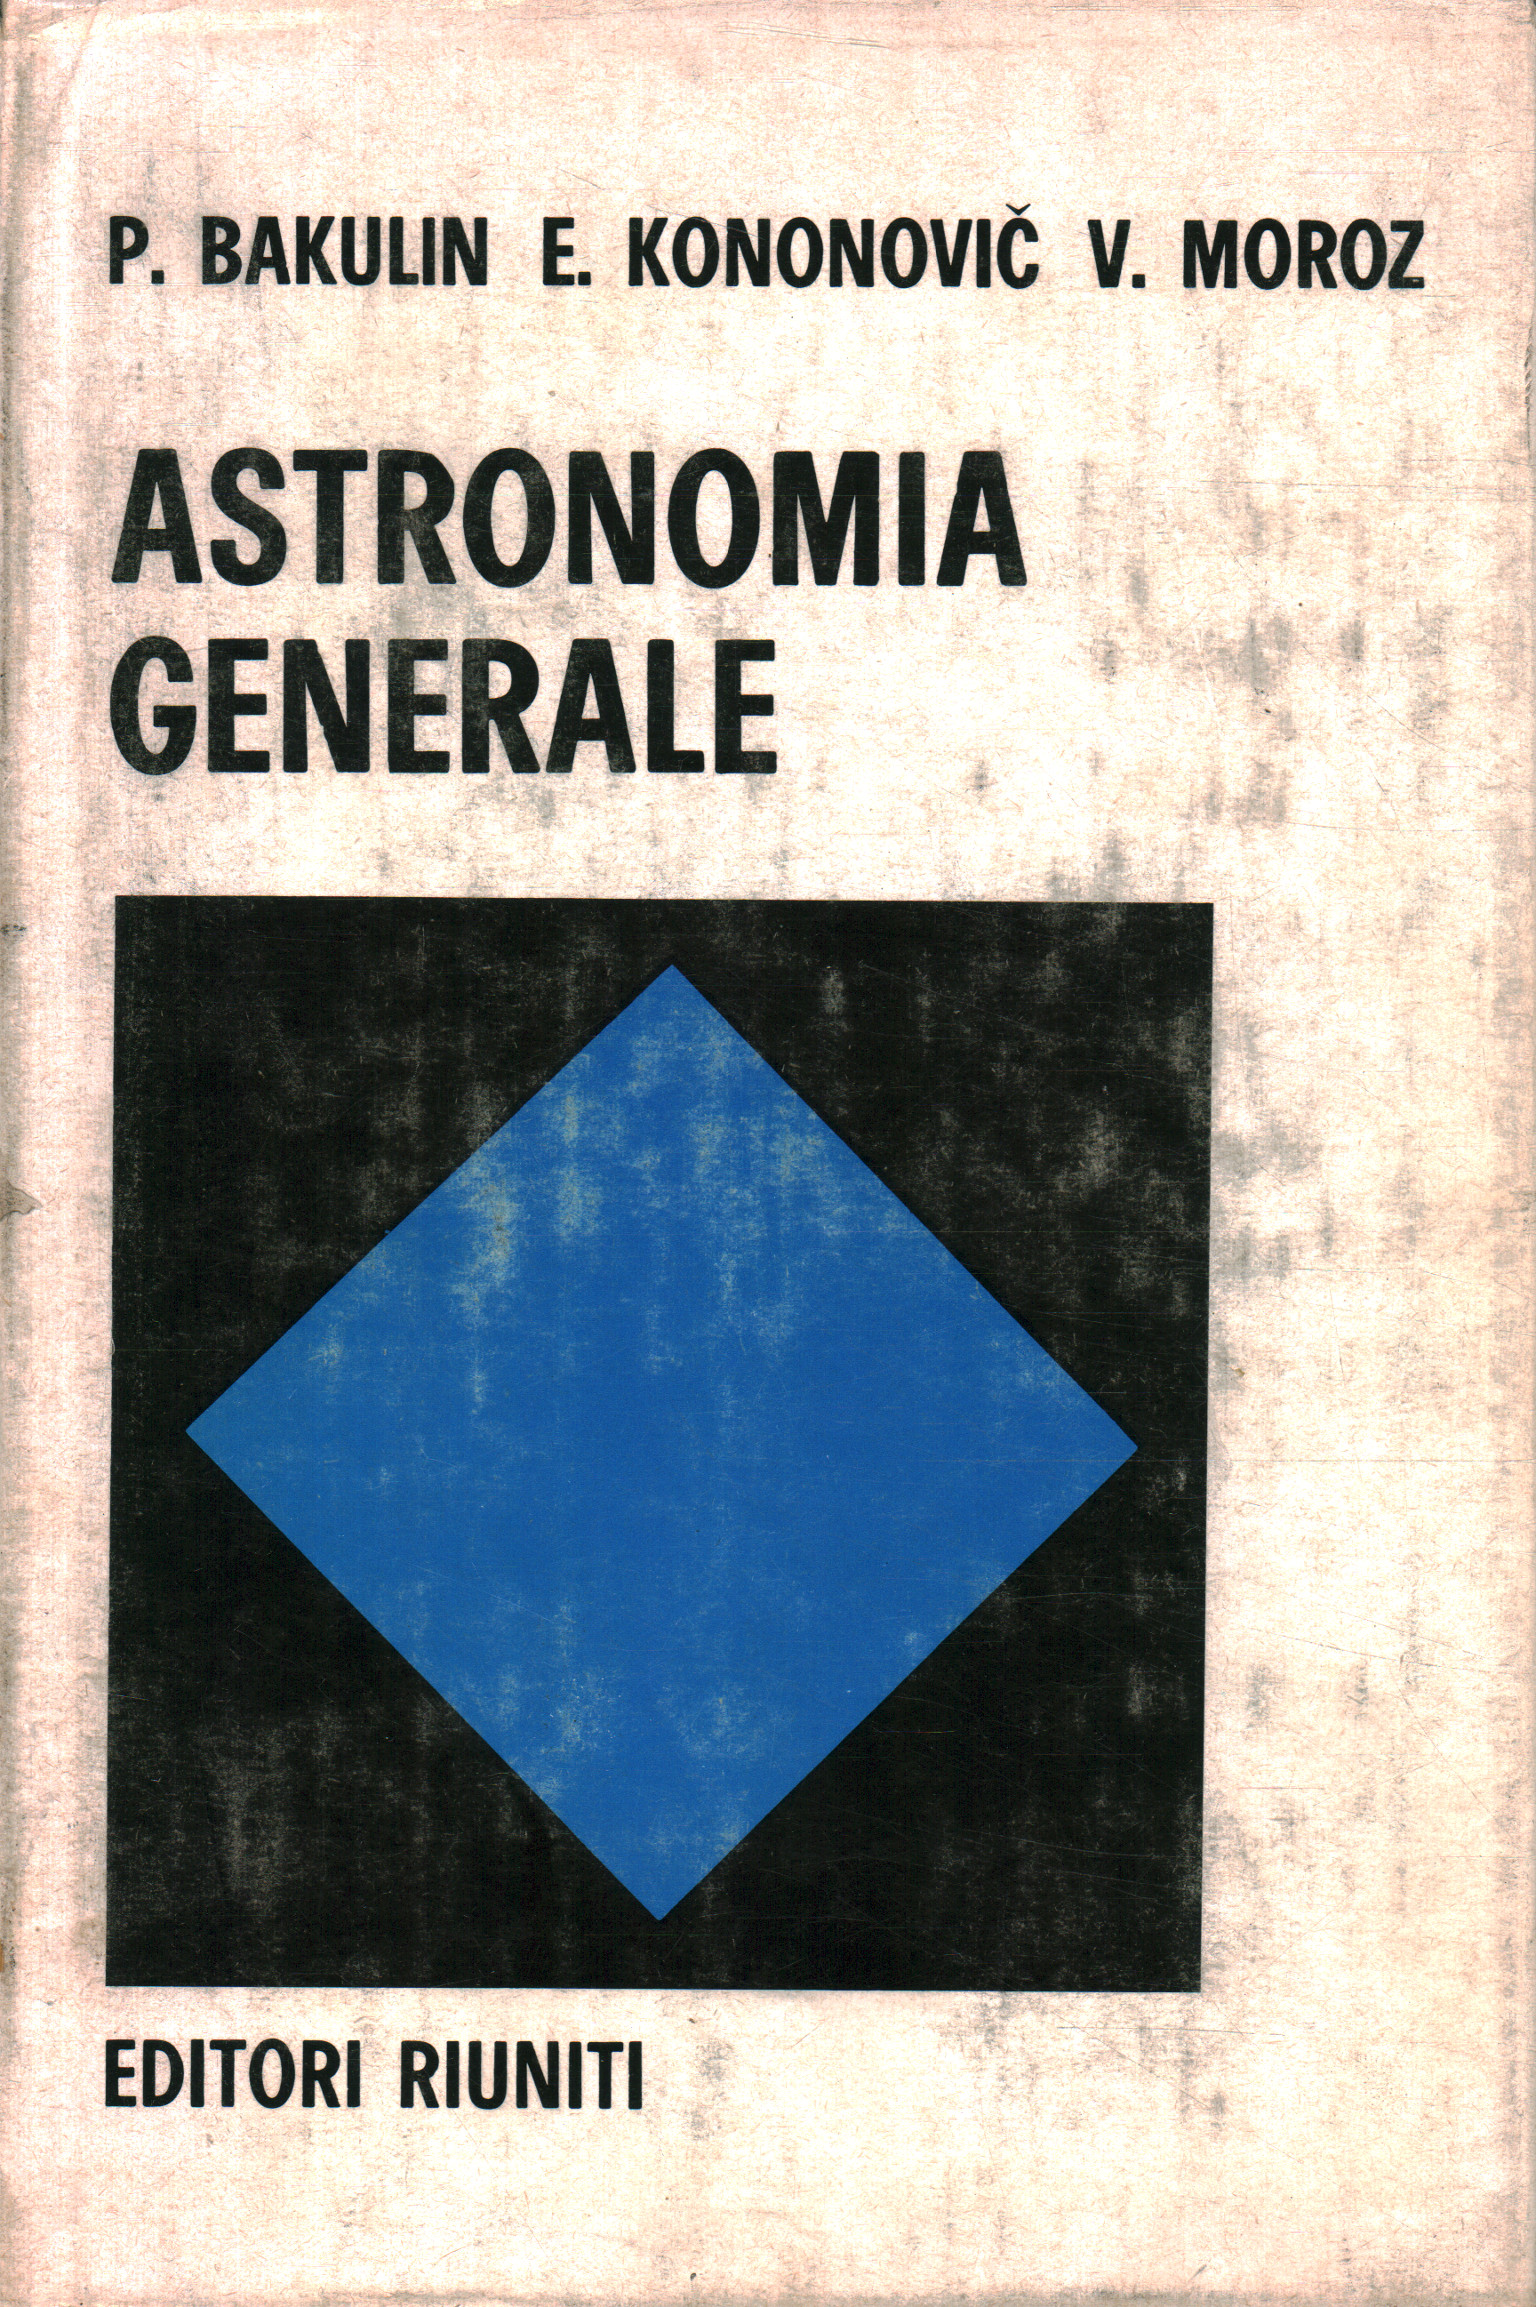 General astronomy